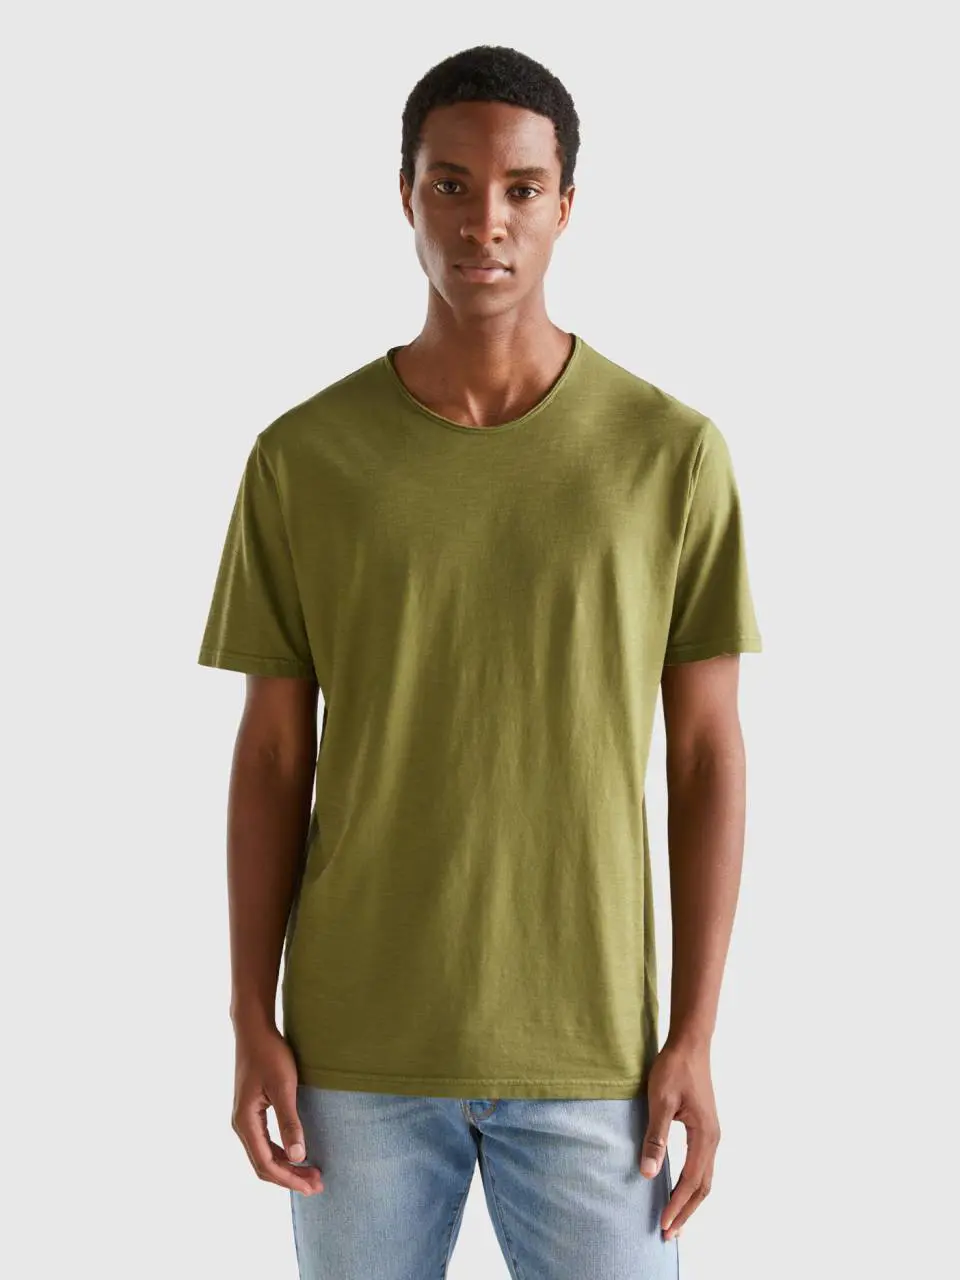 Benetton military green t-shirt in slub cotton. 1